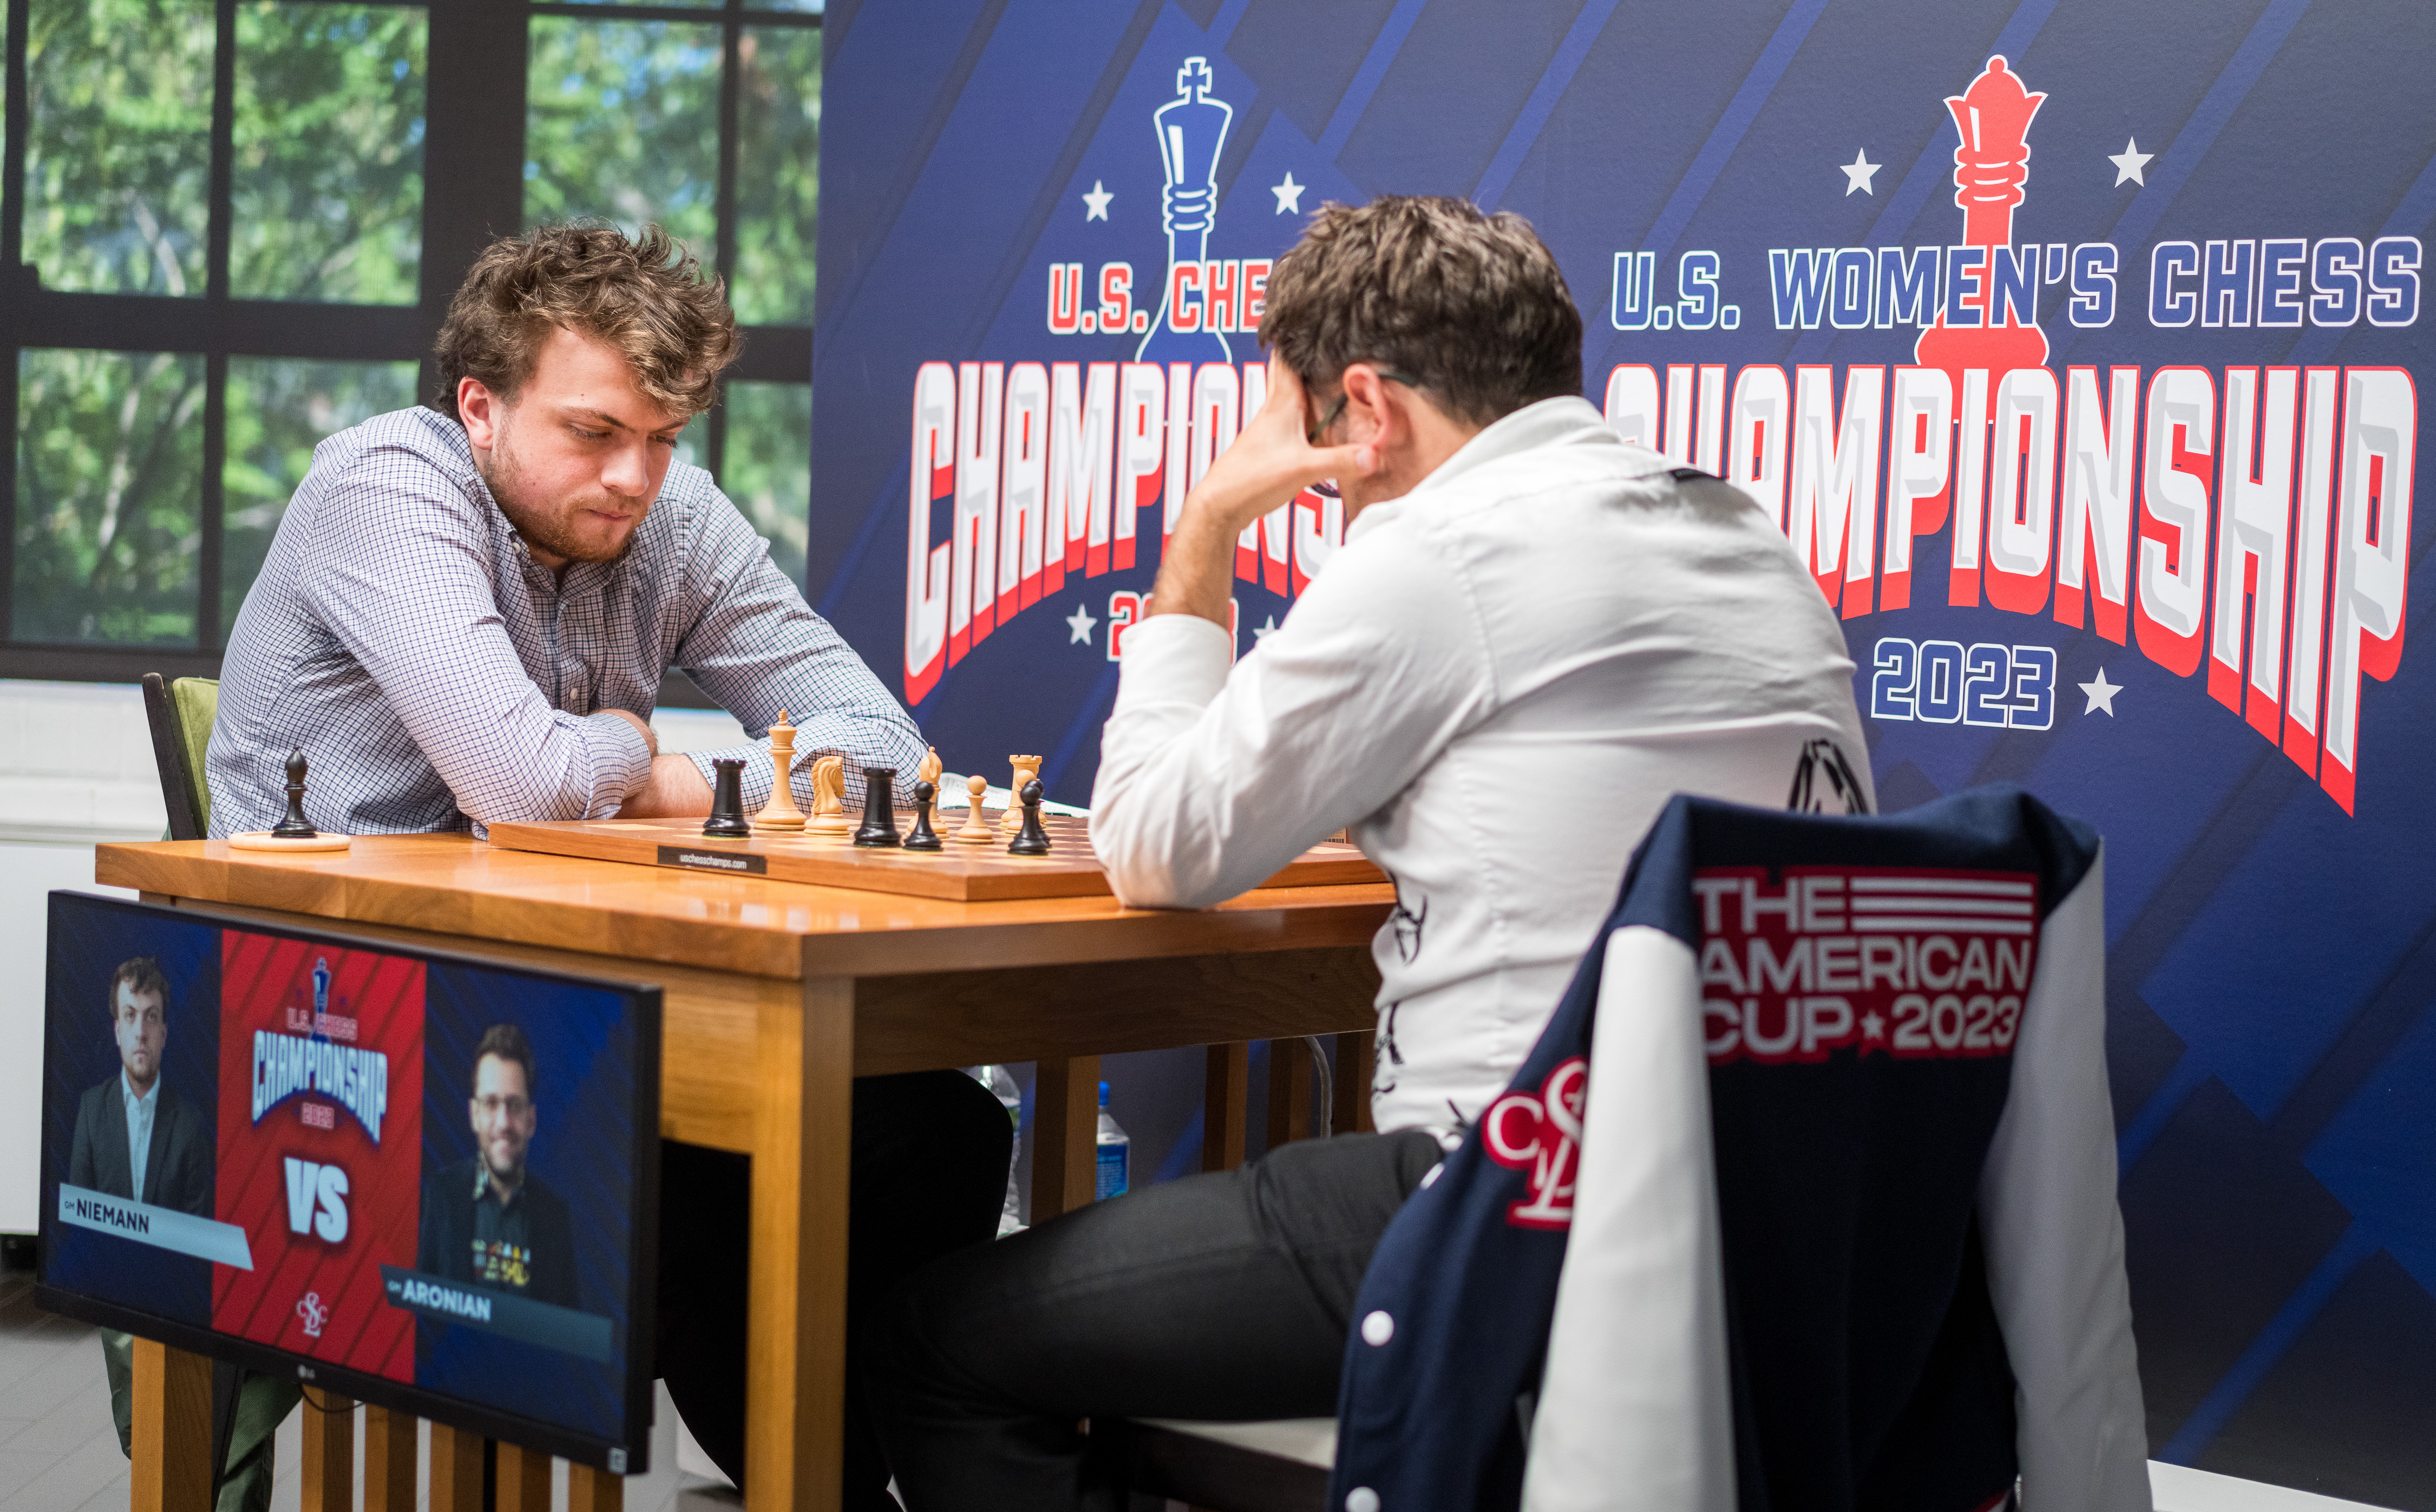 US Chess Championships Rd 5: Caruana Hat Trick, Niemann Beats Aronian 